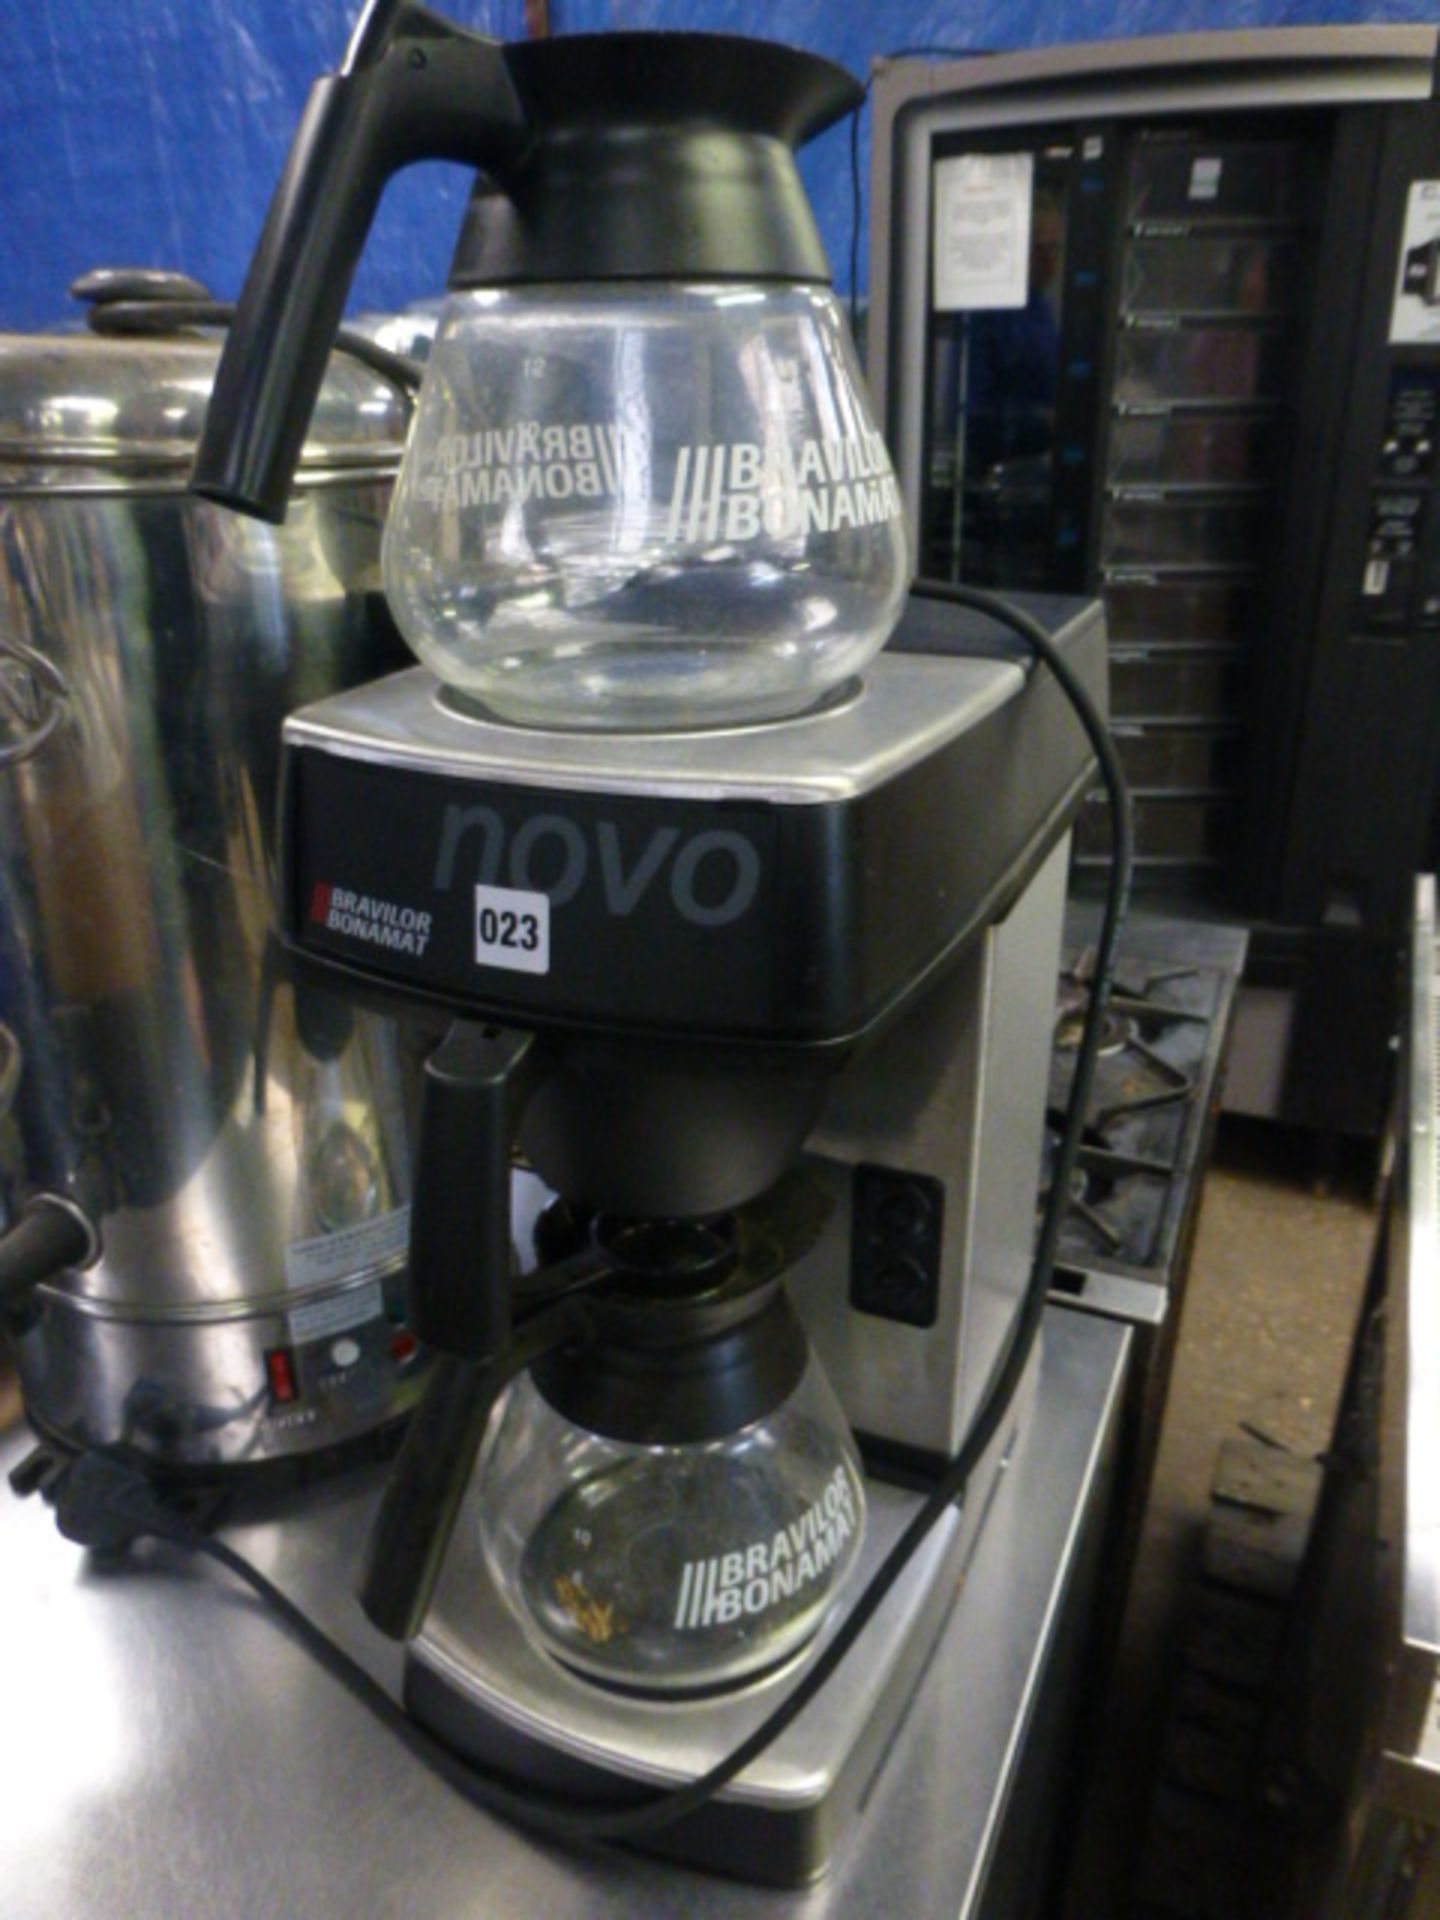 (15) Novo Bravilor Bonamat filter coffee machine with 2 jugs